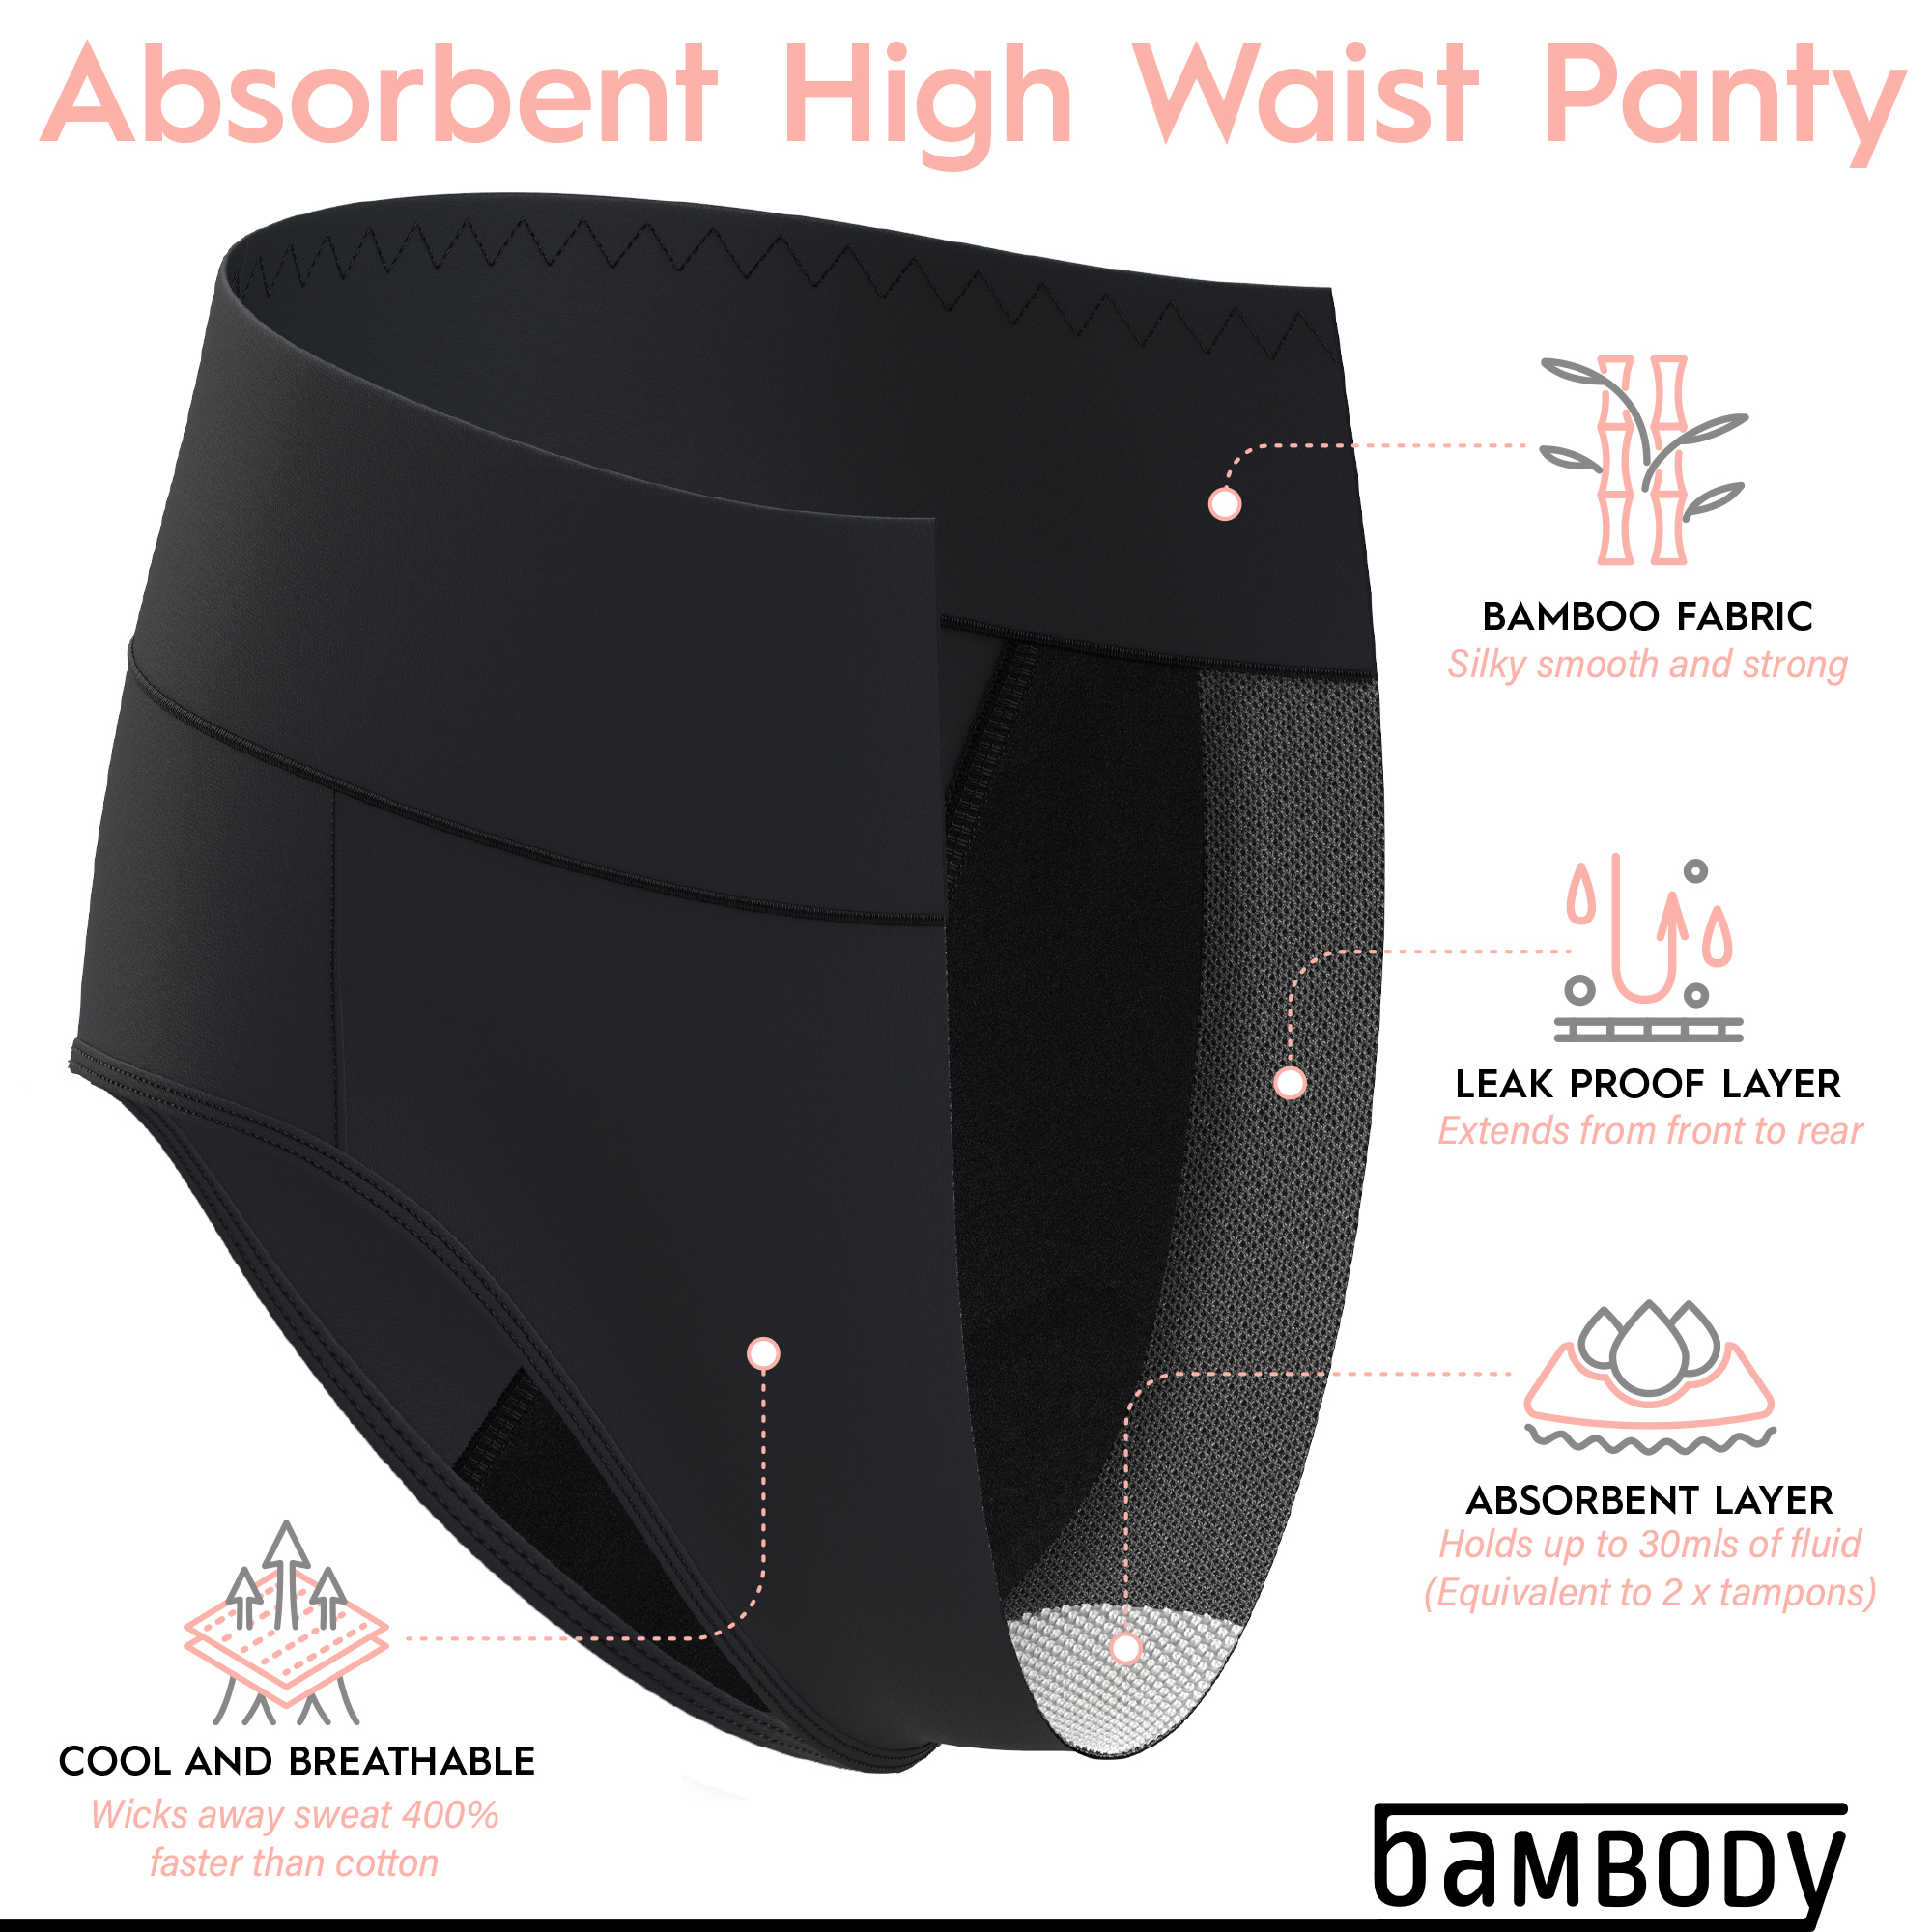  Bambody Period Underwear For Women - Bamboo